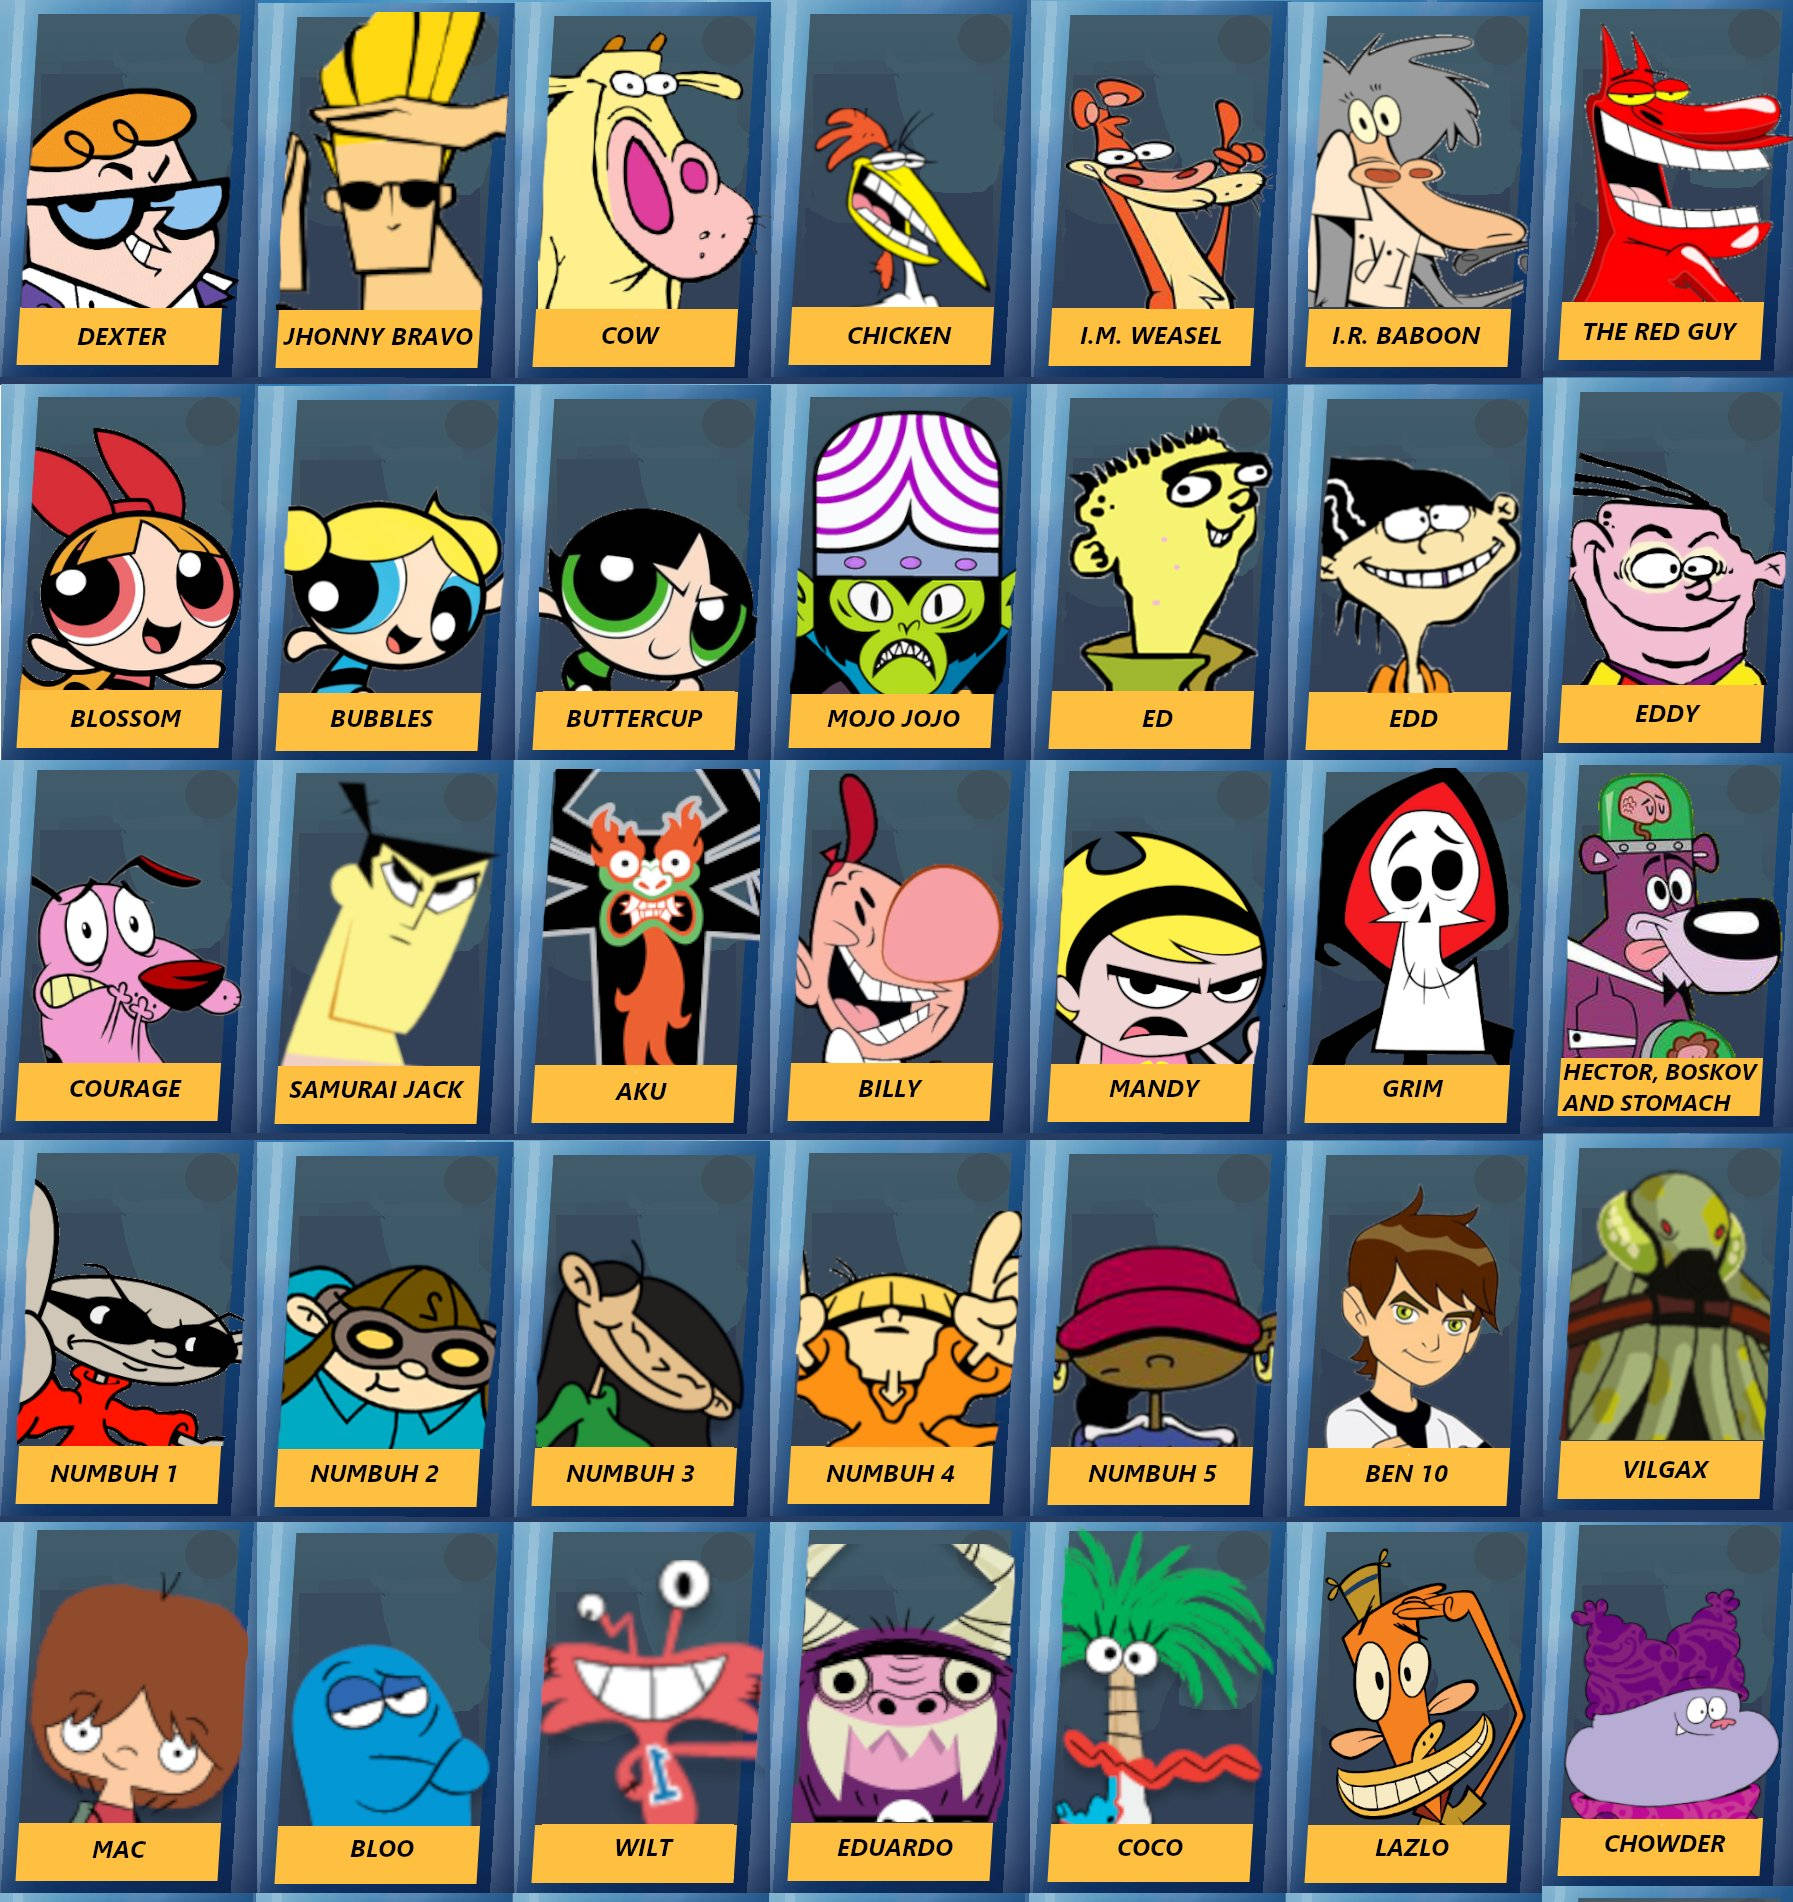 400+] Cartoon Network Wallpapers